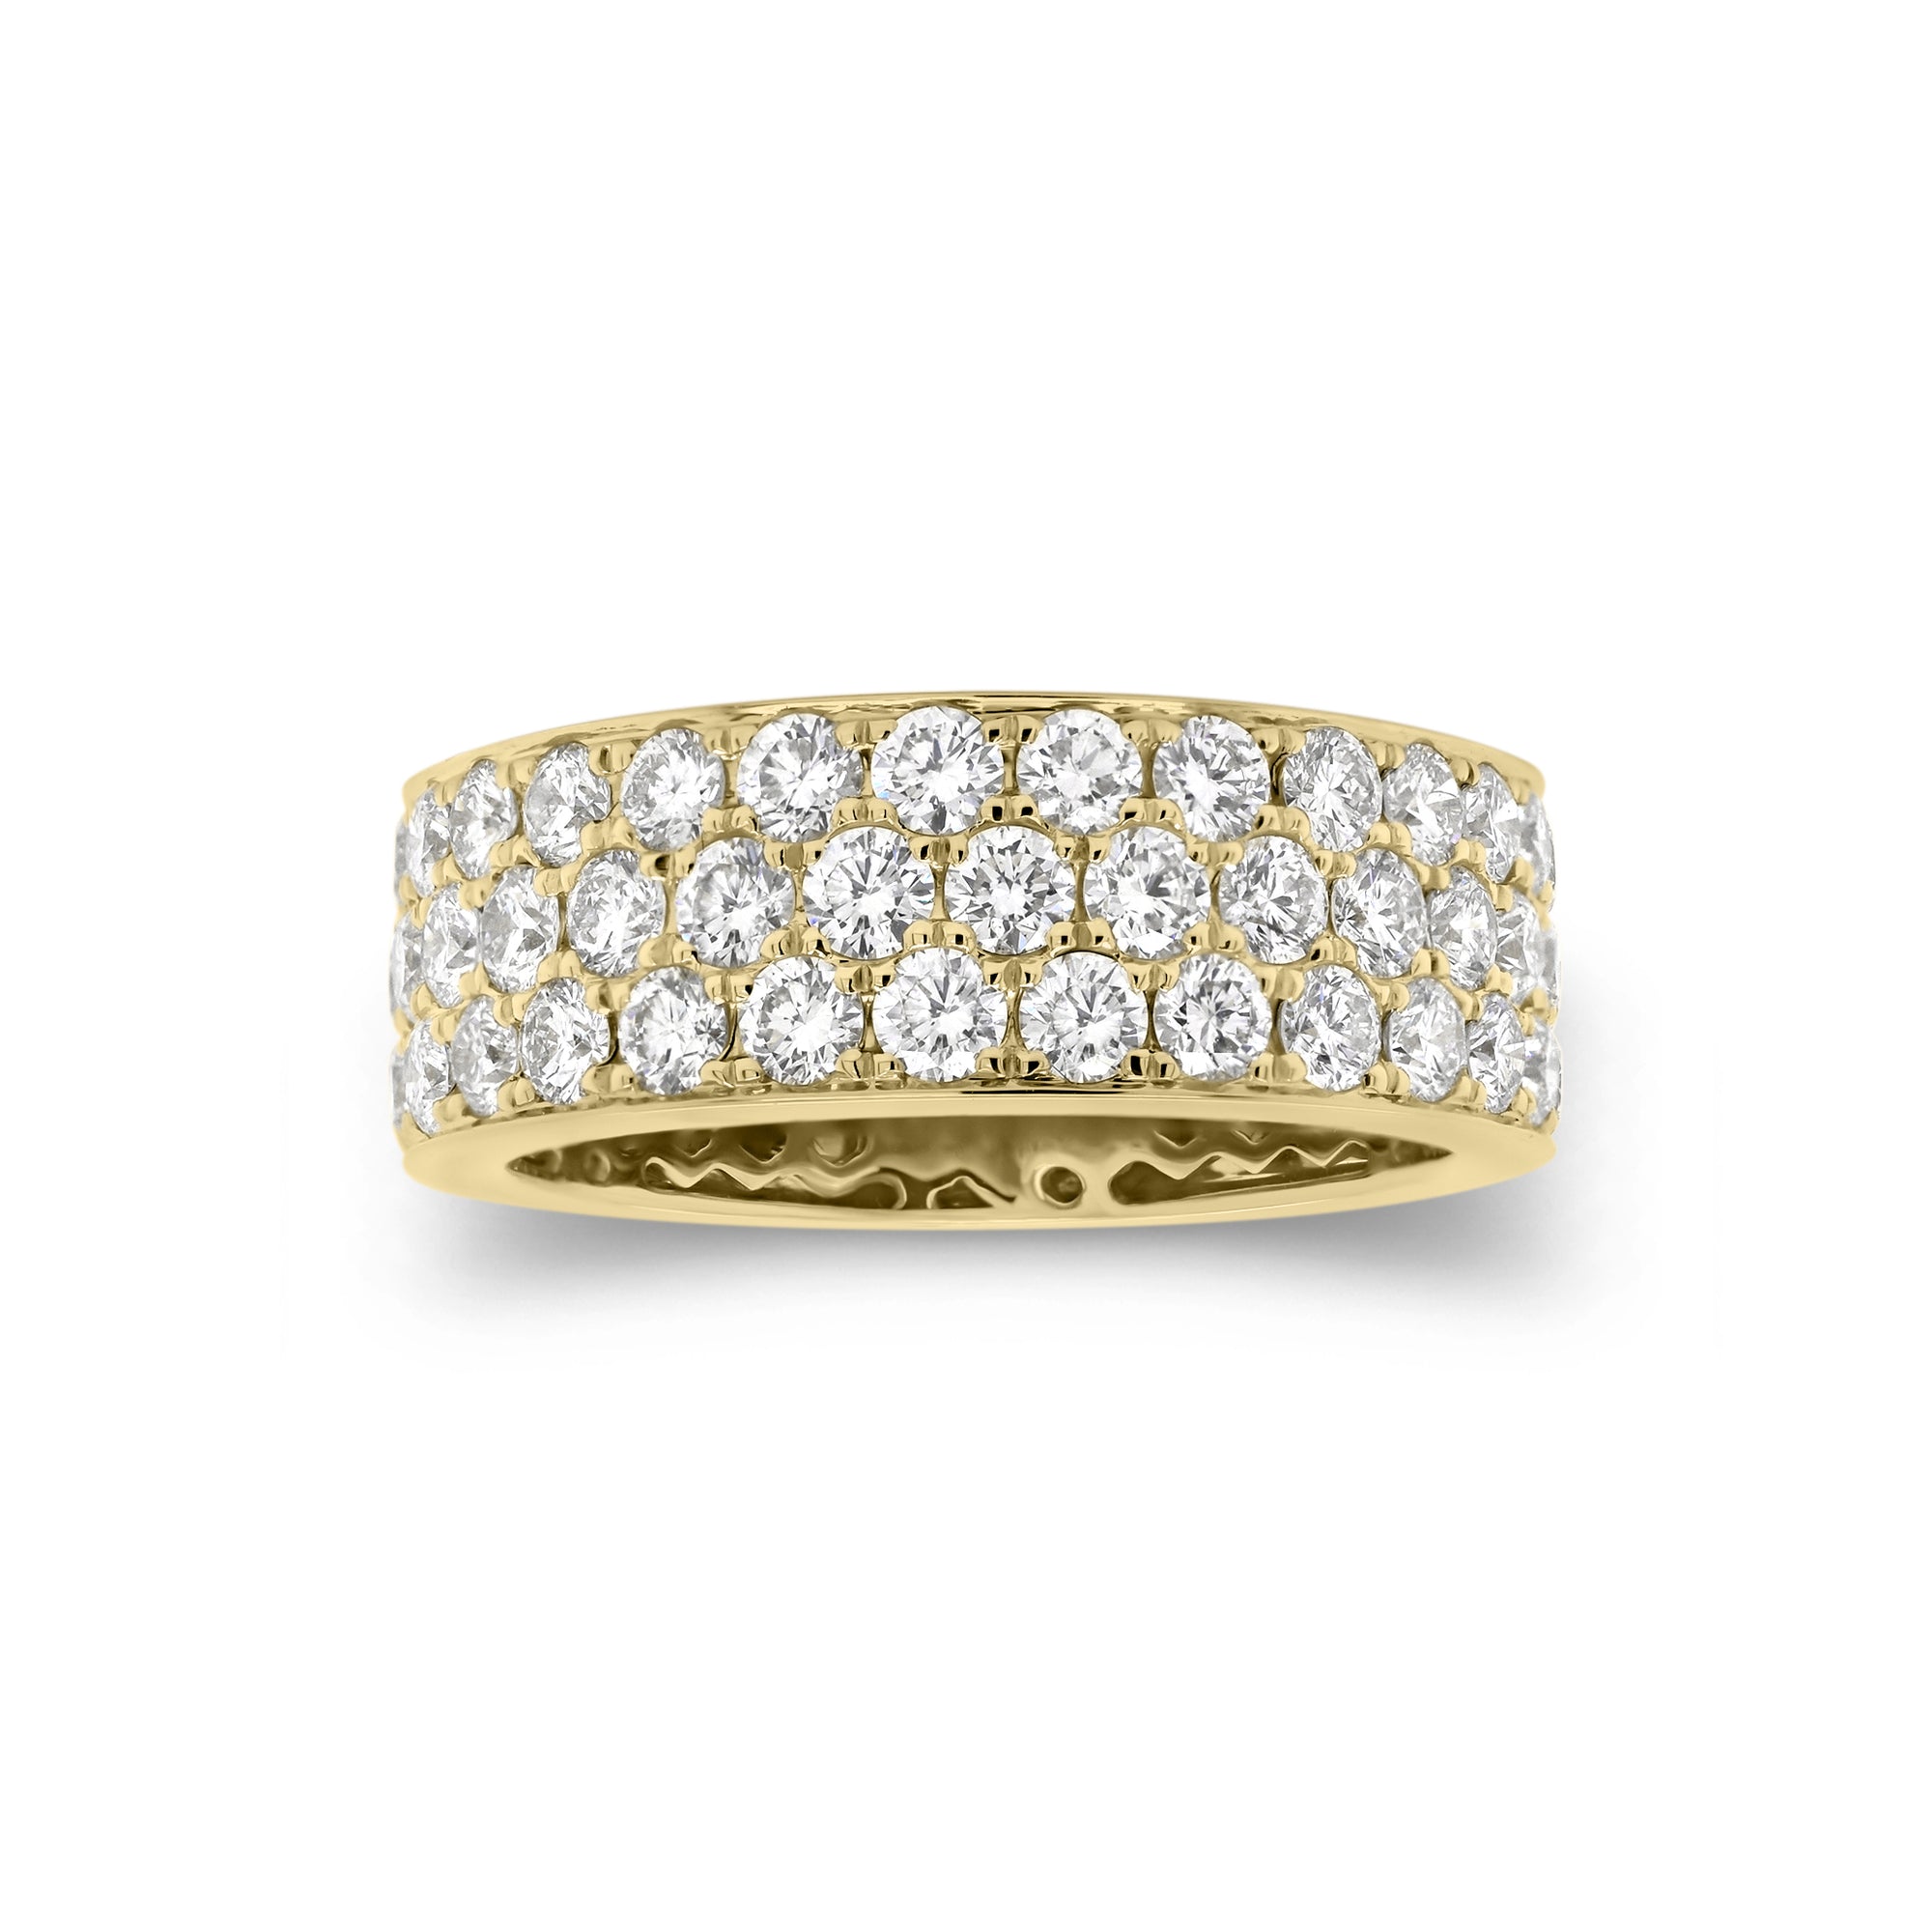 Diamond Triple Row Band  - 18K gold weighing 6.11 grams  - 46 round diamonds totaling 1.88 carats